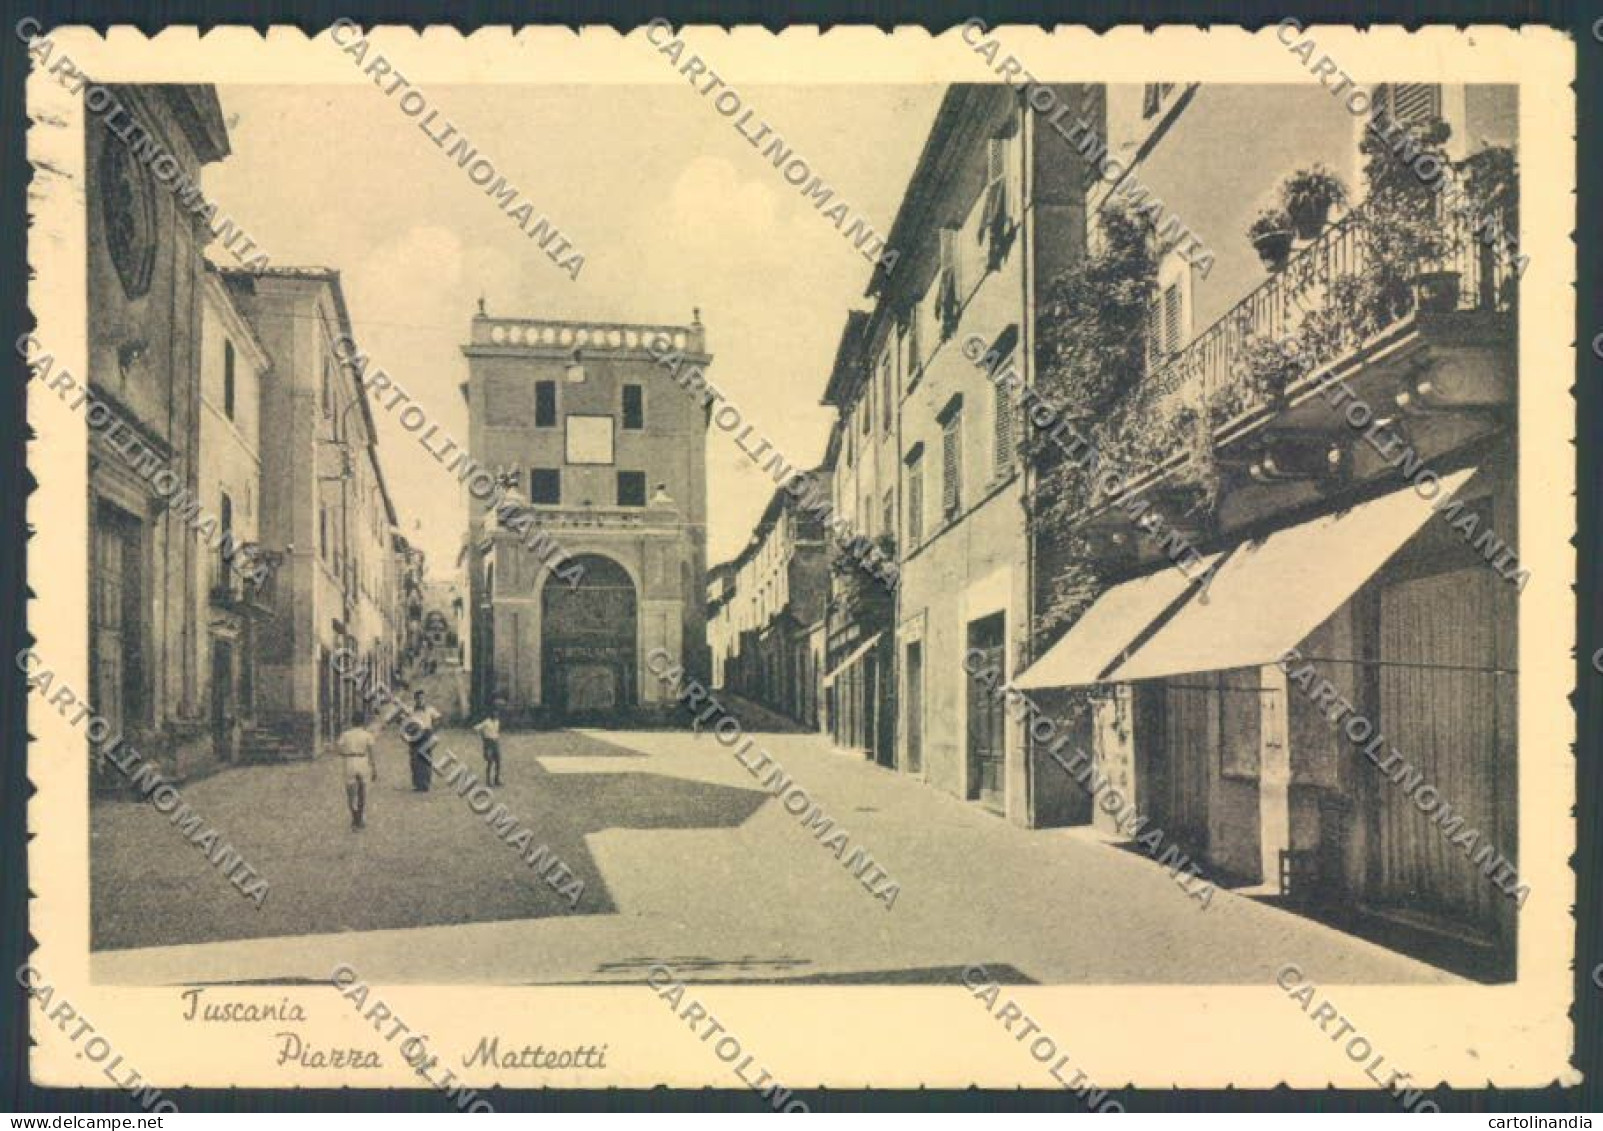 Viterbo Tuscania FG Cartolina ZF8596 - Viterbo